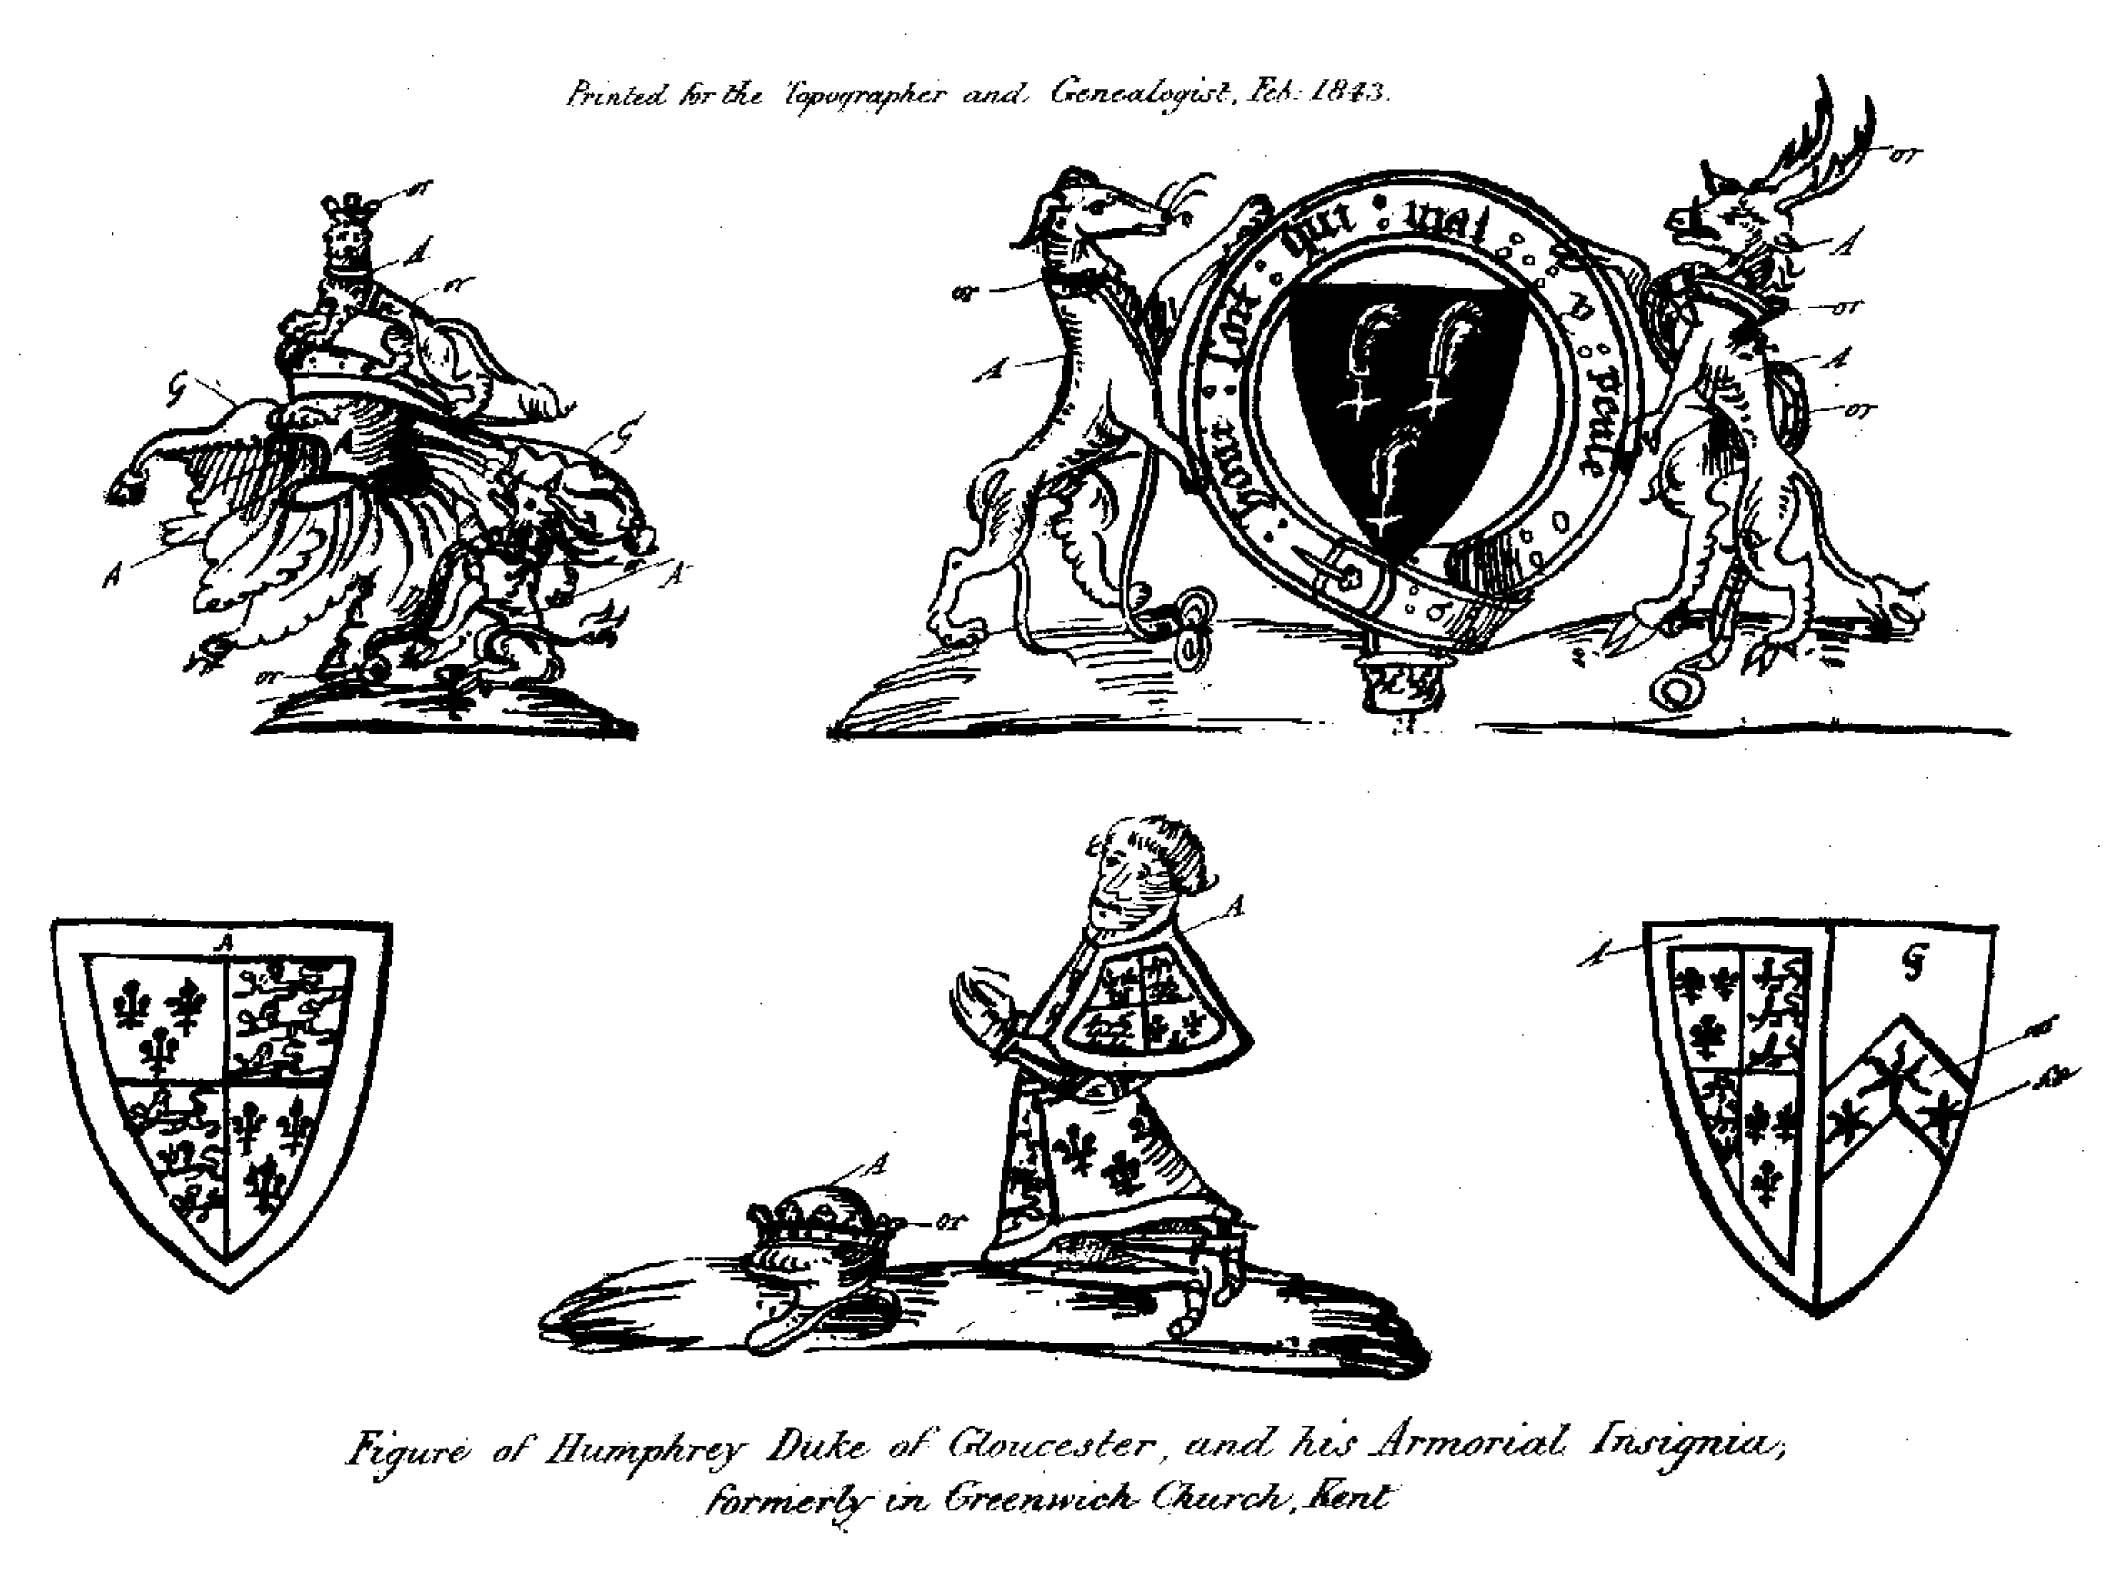 Humphrey Duke of Gloucester and his armorial insignia